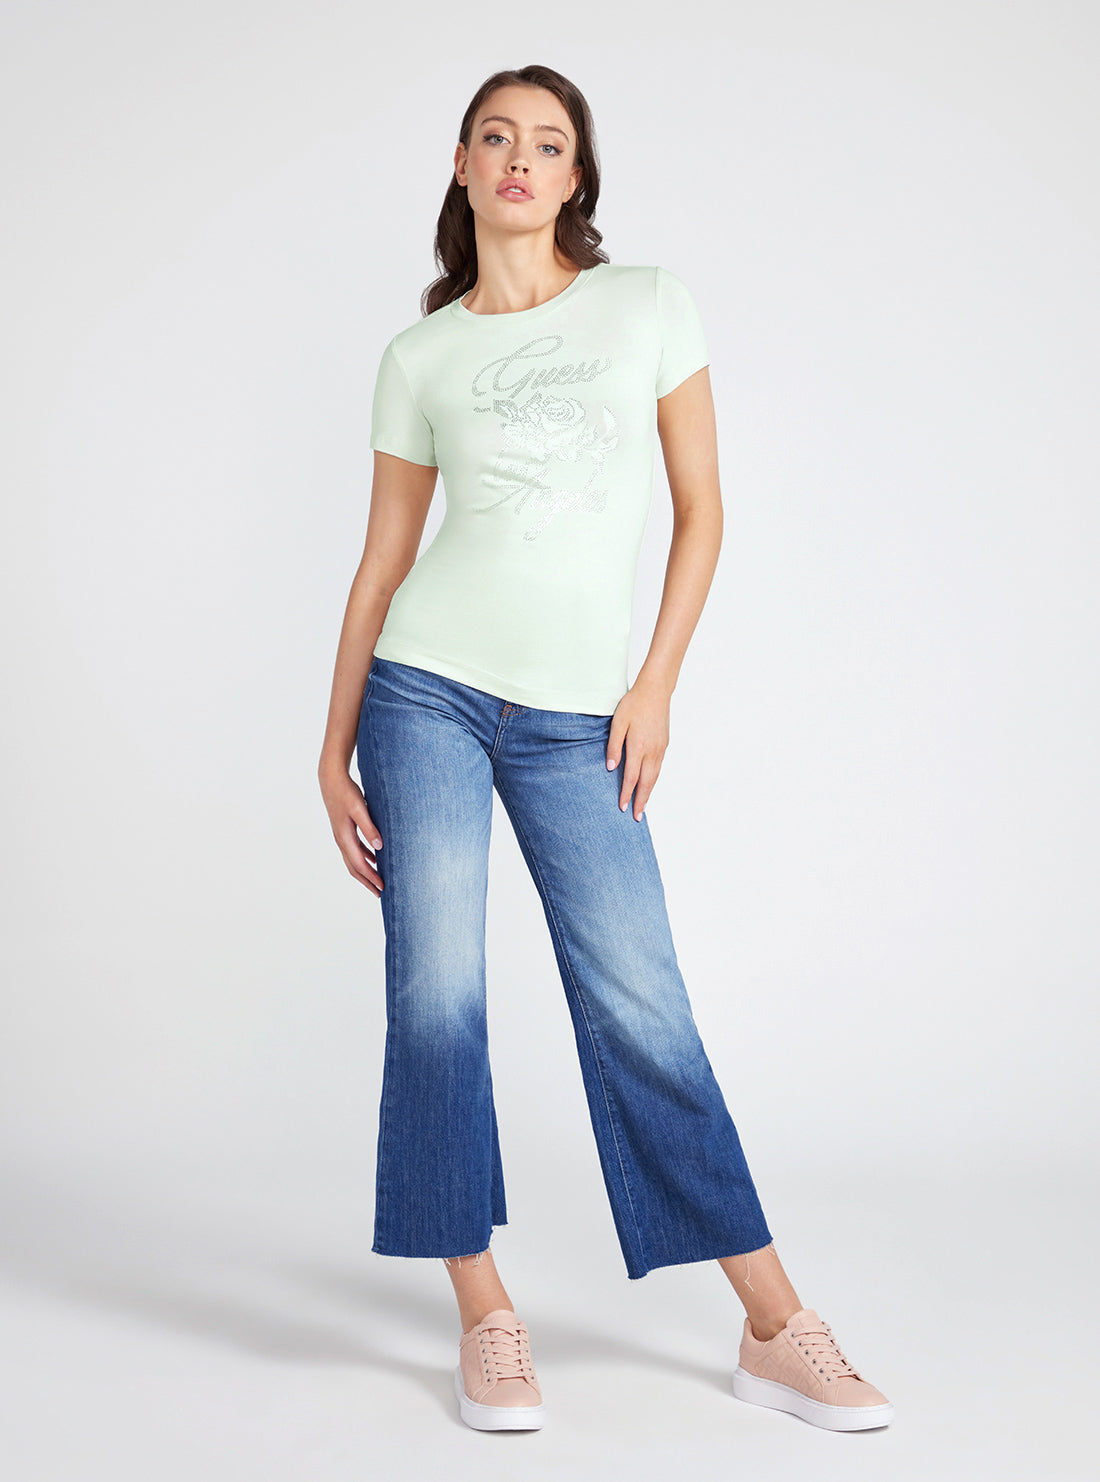 Mint Green Rhinestone Rose T-Shirt | GUESS Women's Apparel | full view